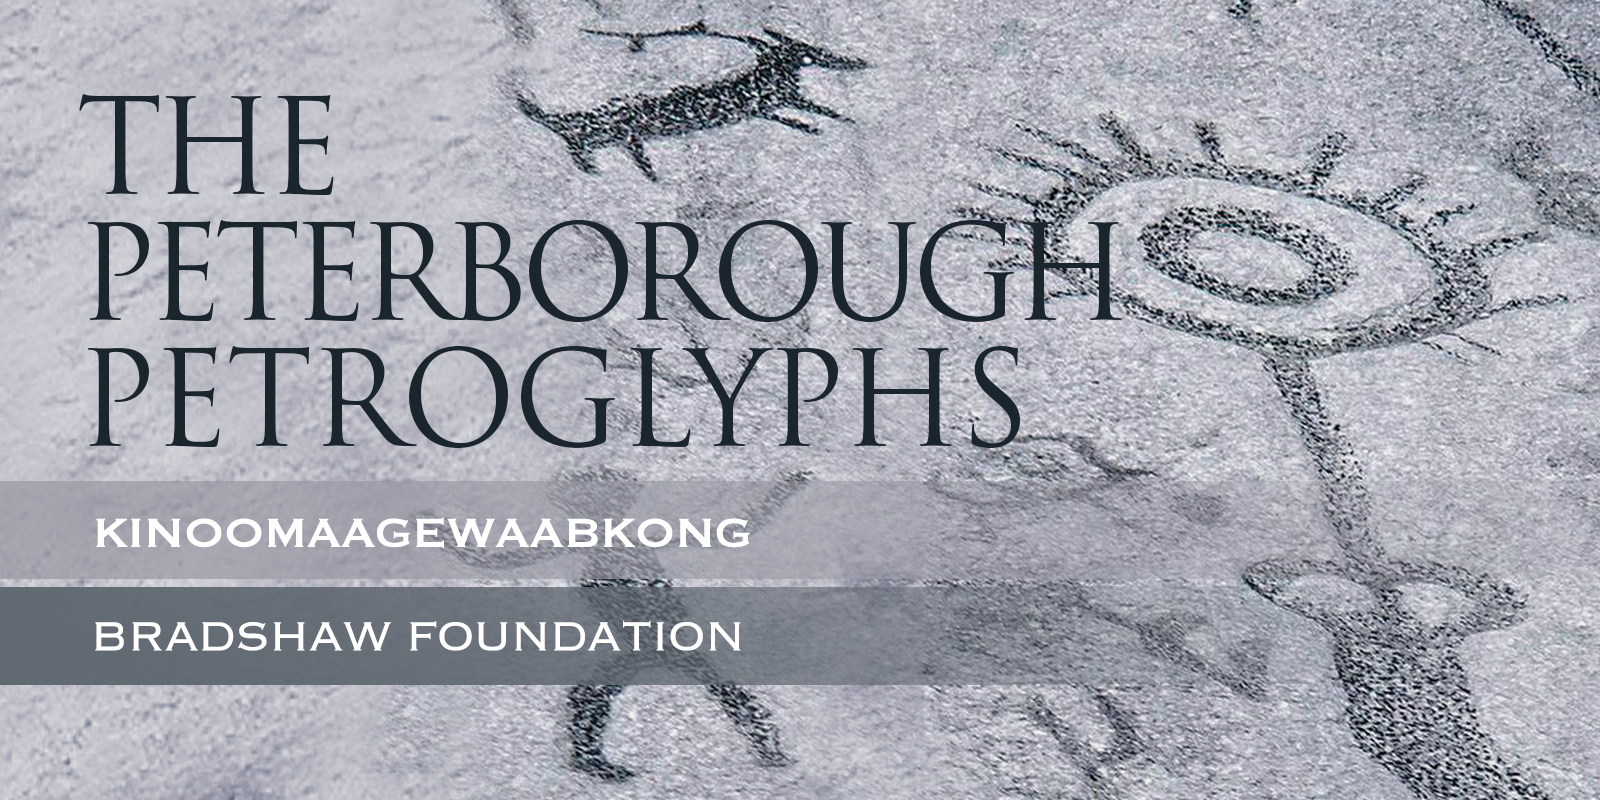 The Peterborough Petroglyphs